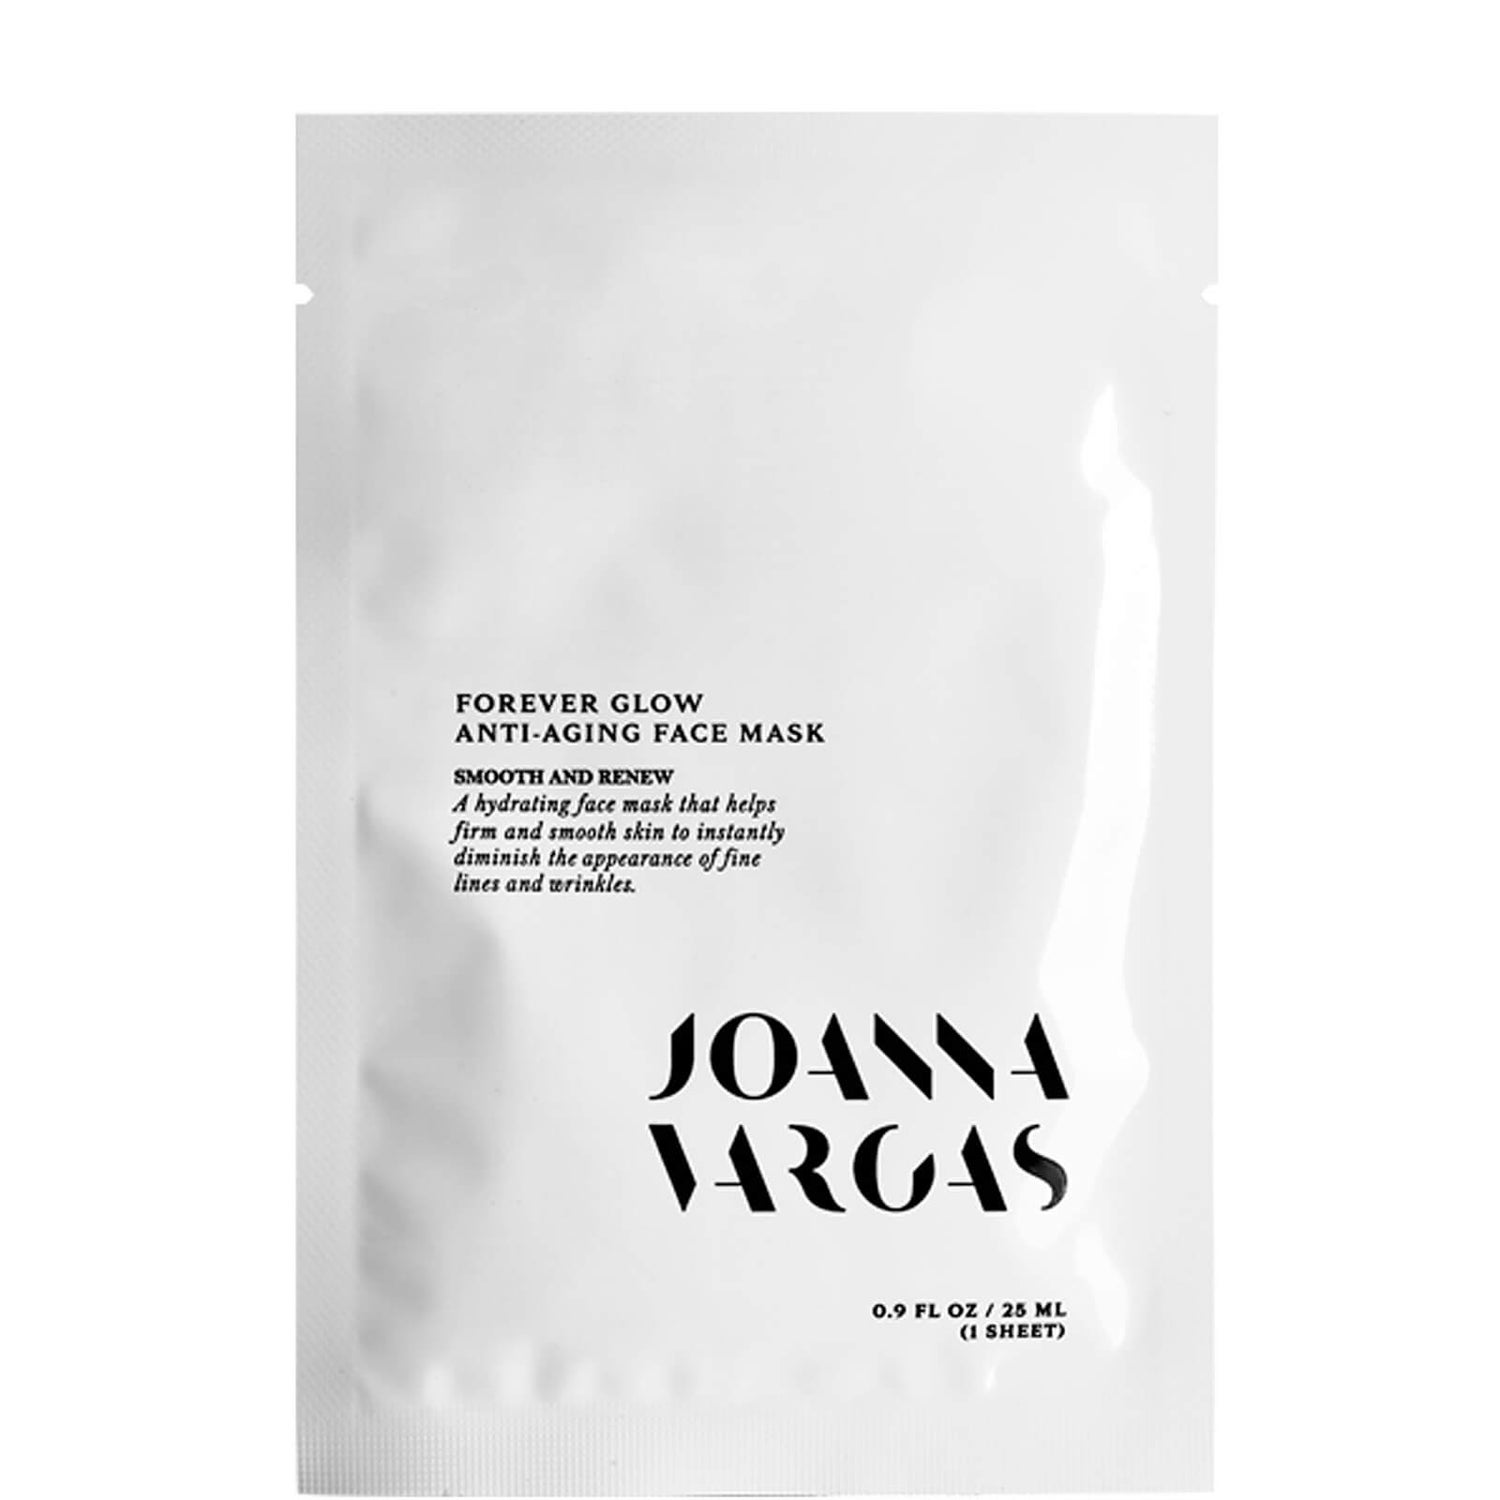 Joanna Vargas Forever Glow Anti-Aging Face Mask (4.5 fl. oz.)